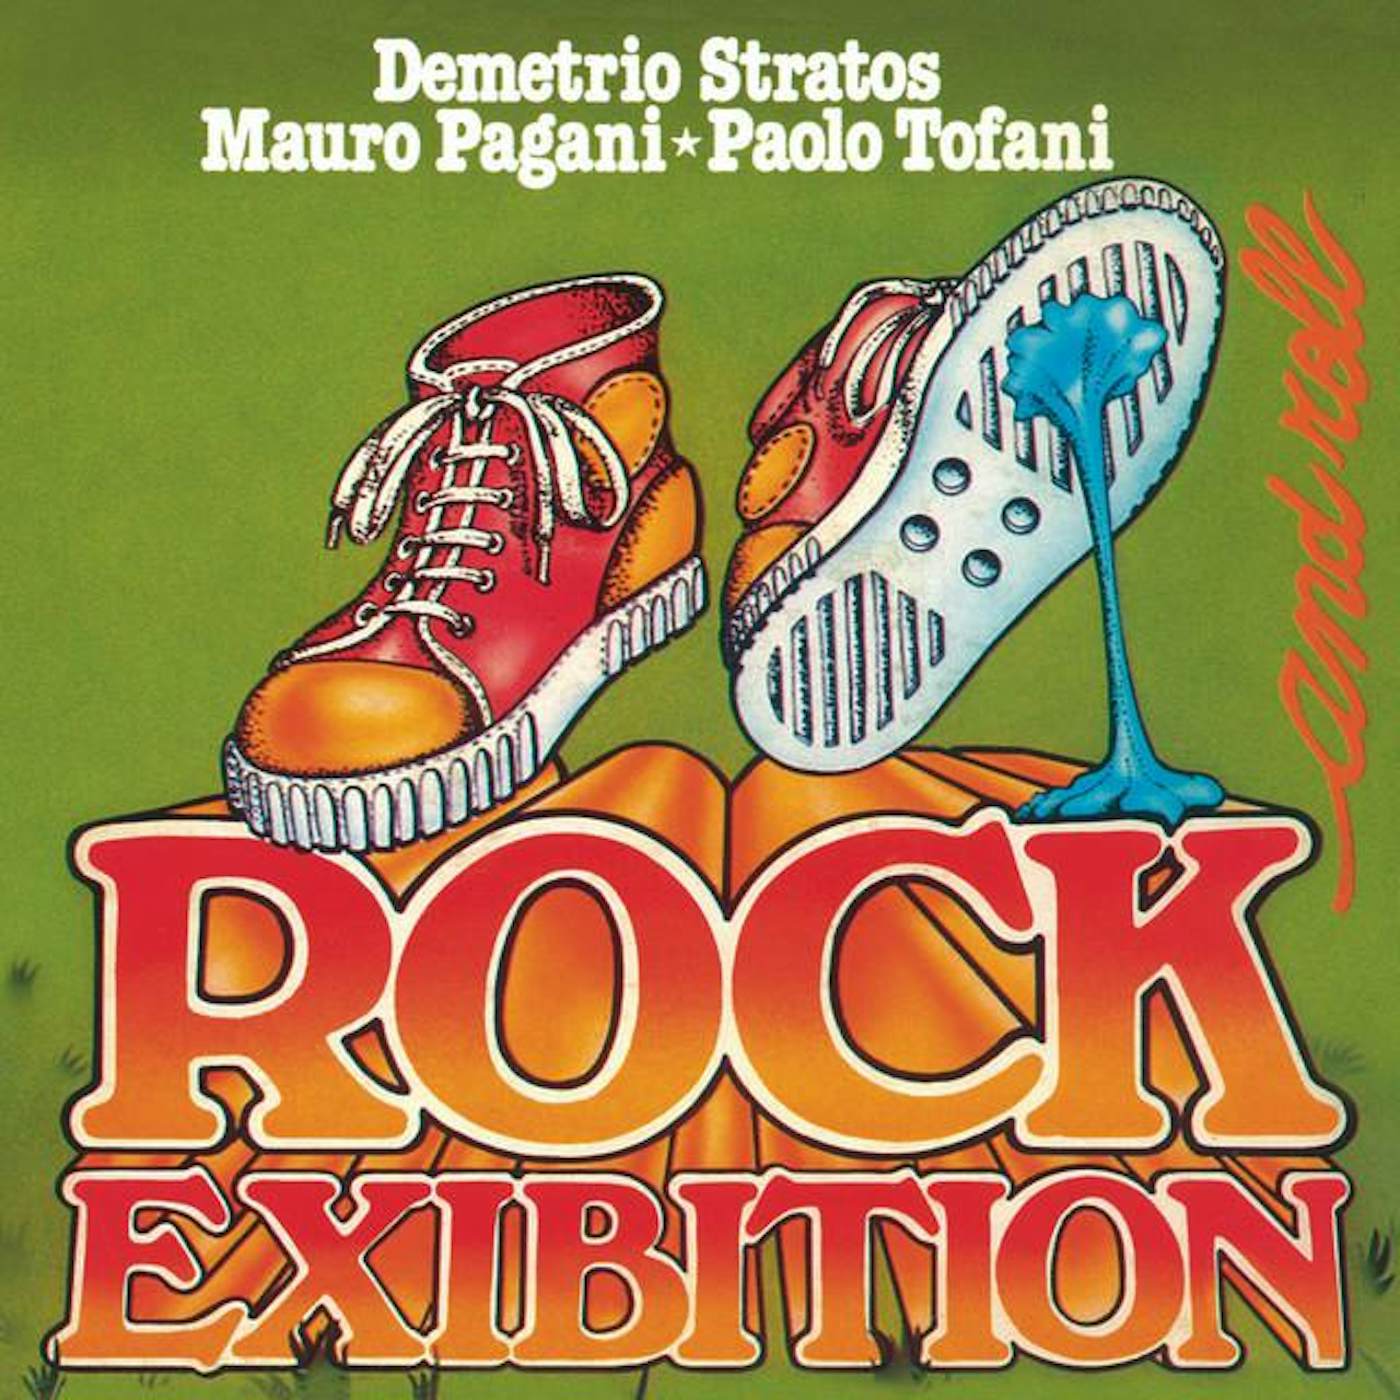 Demetrio Stratos Metrodora Vinyl Record